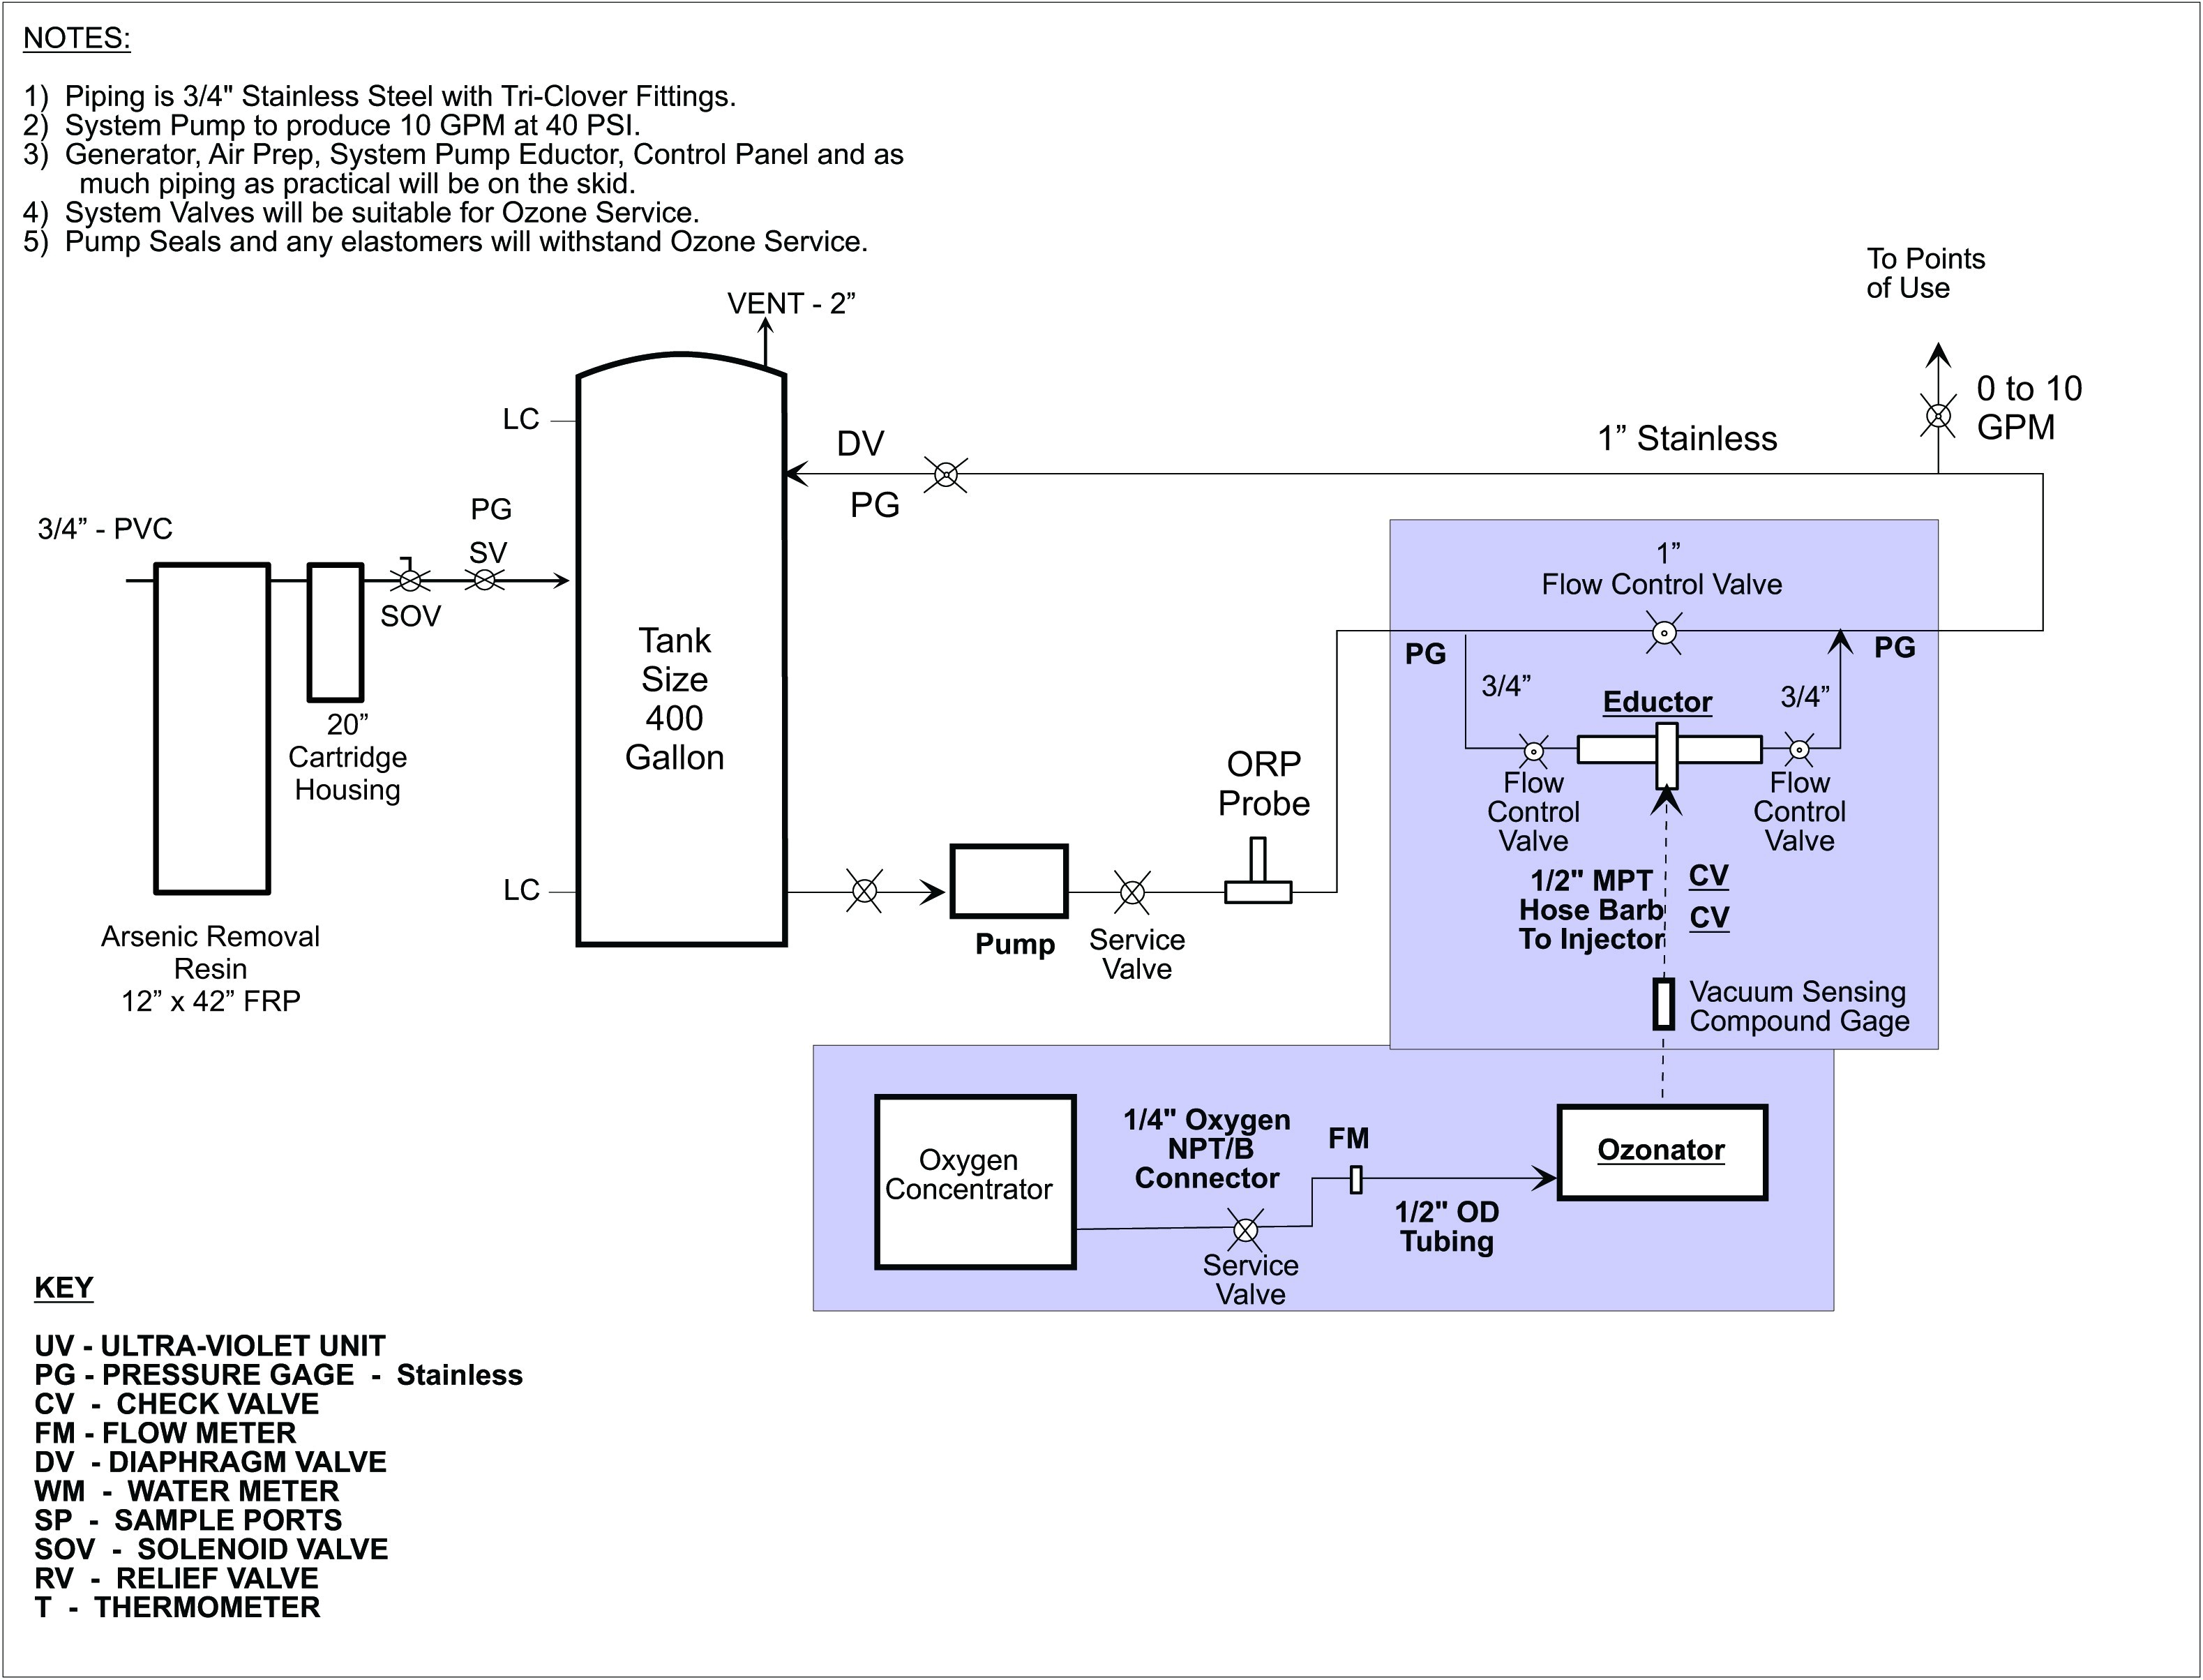 logic probe circuit diagram darlington logic probe circuit diagram tradeoficcom wire data schema e280a2 png